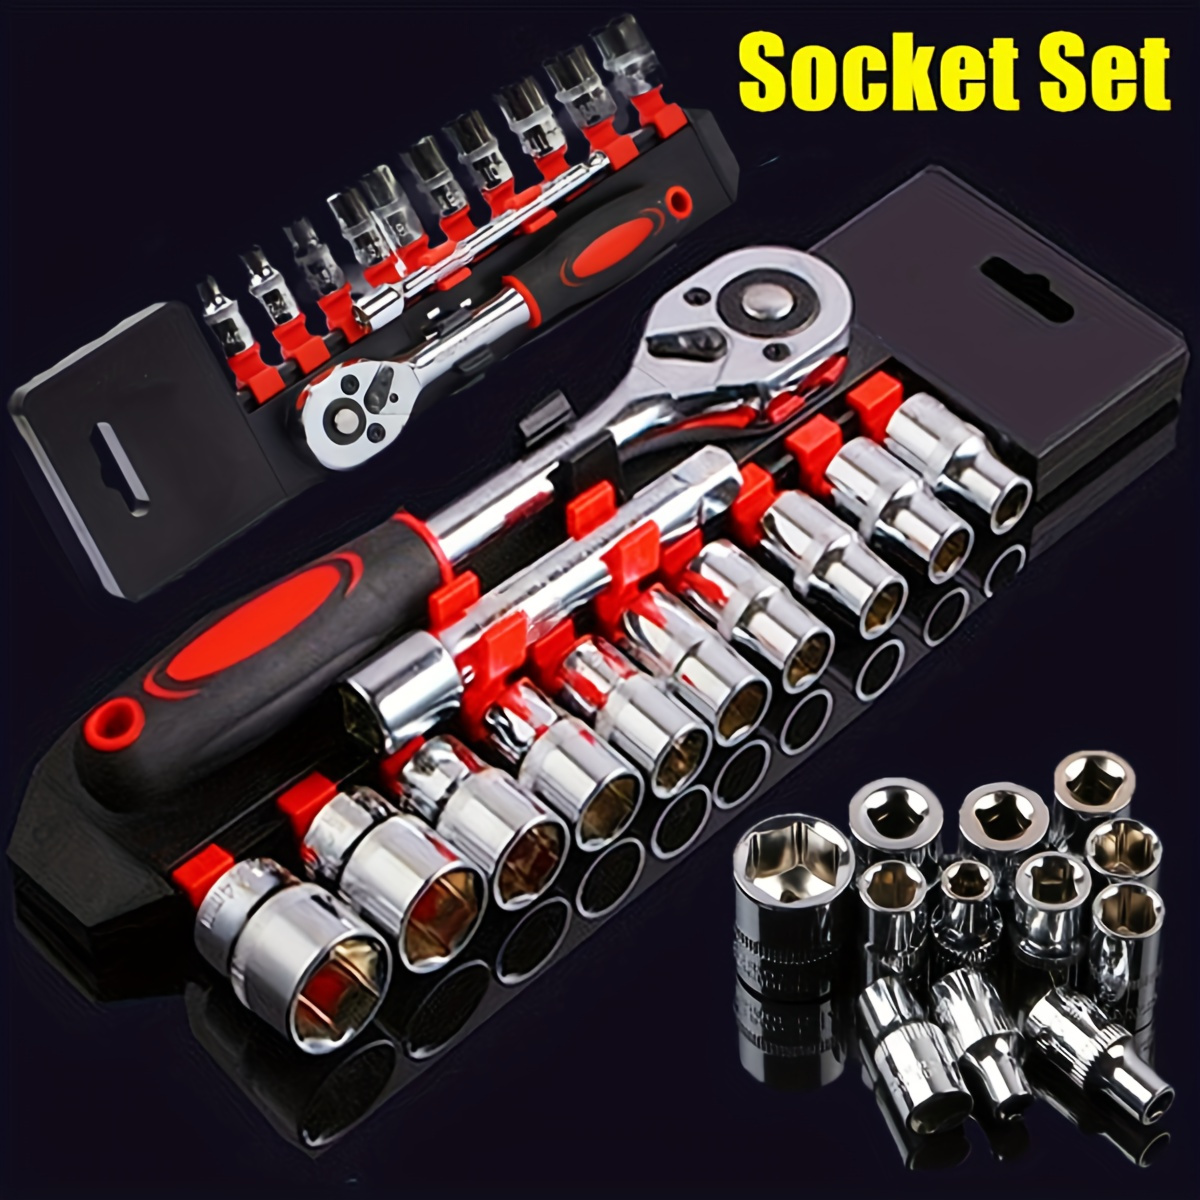 

1set 1/4 New Upgrade Wrench Socket Set, Hardware Car Boat Motorcycle Bicycle Repairing Tool